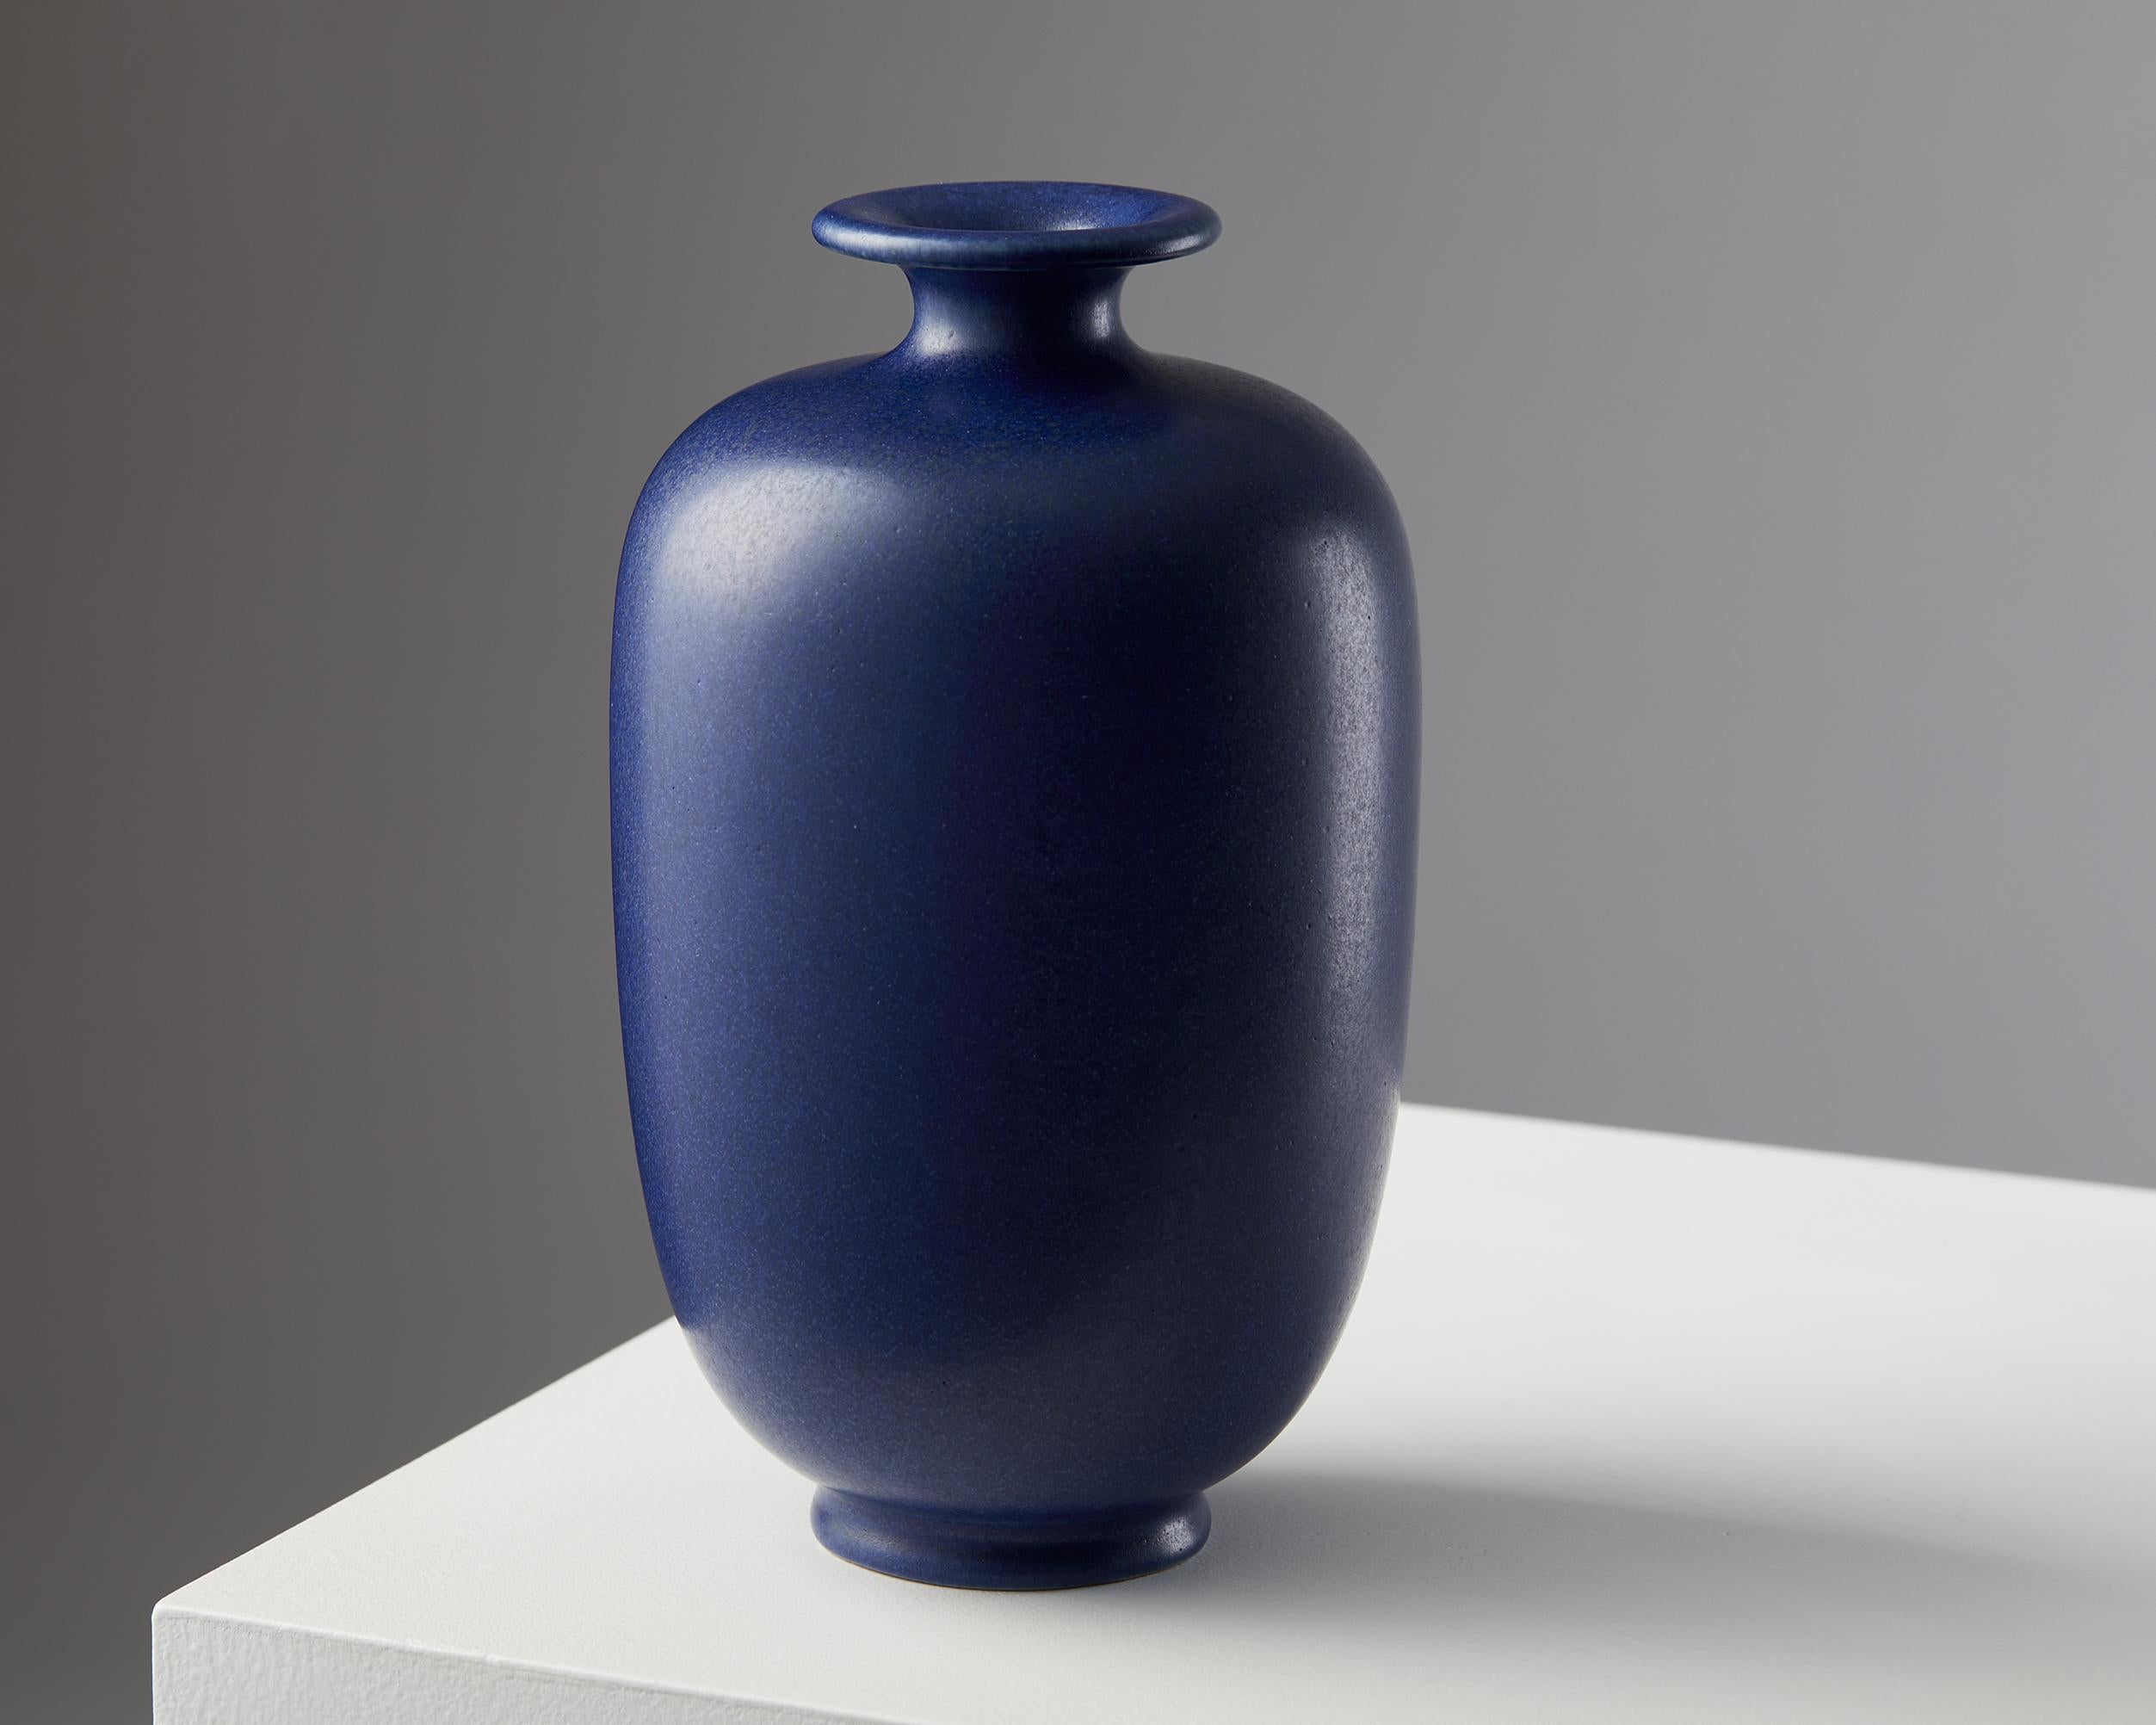 Vase designed by Erich and Ingrid Triller for Tobo,
Sweden. 1950s.
Stoneware.

Signed.

Measures: height: 21.5 cm / 8 1/2